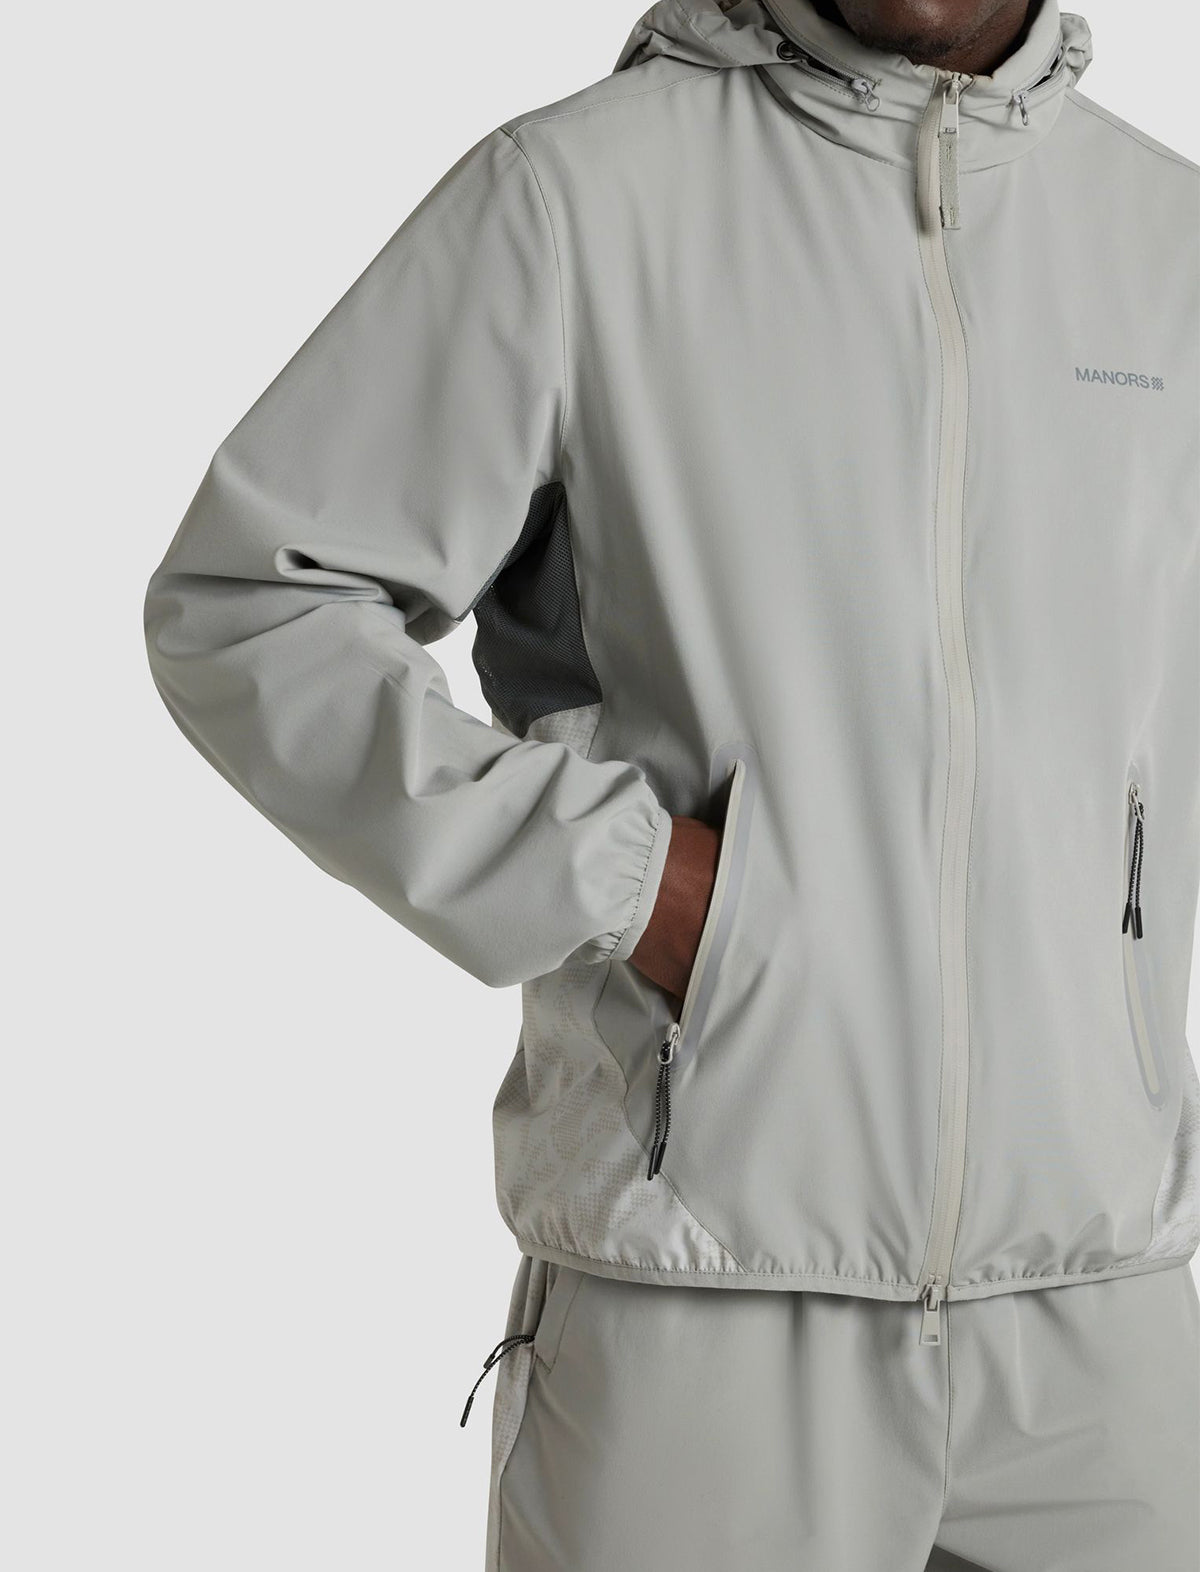 MANORS GOLF Ranger Tech Jacket in Grey